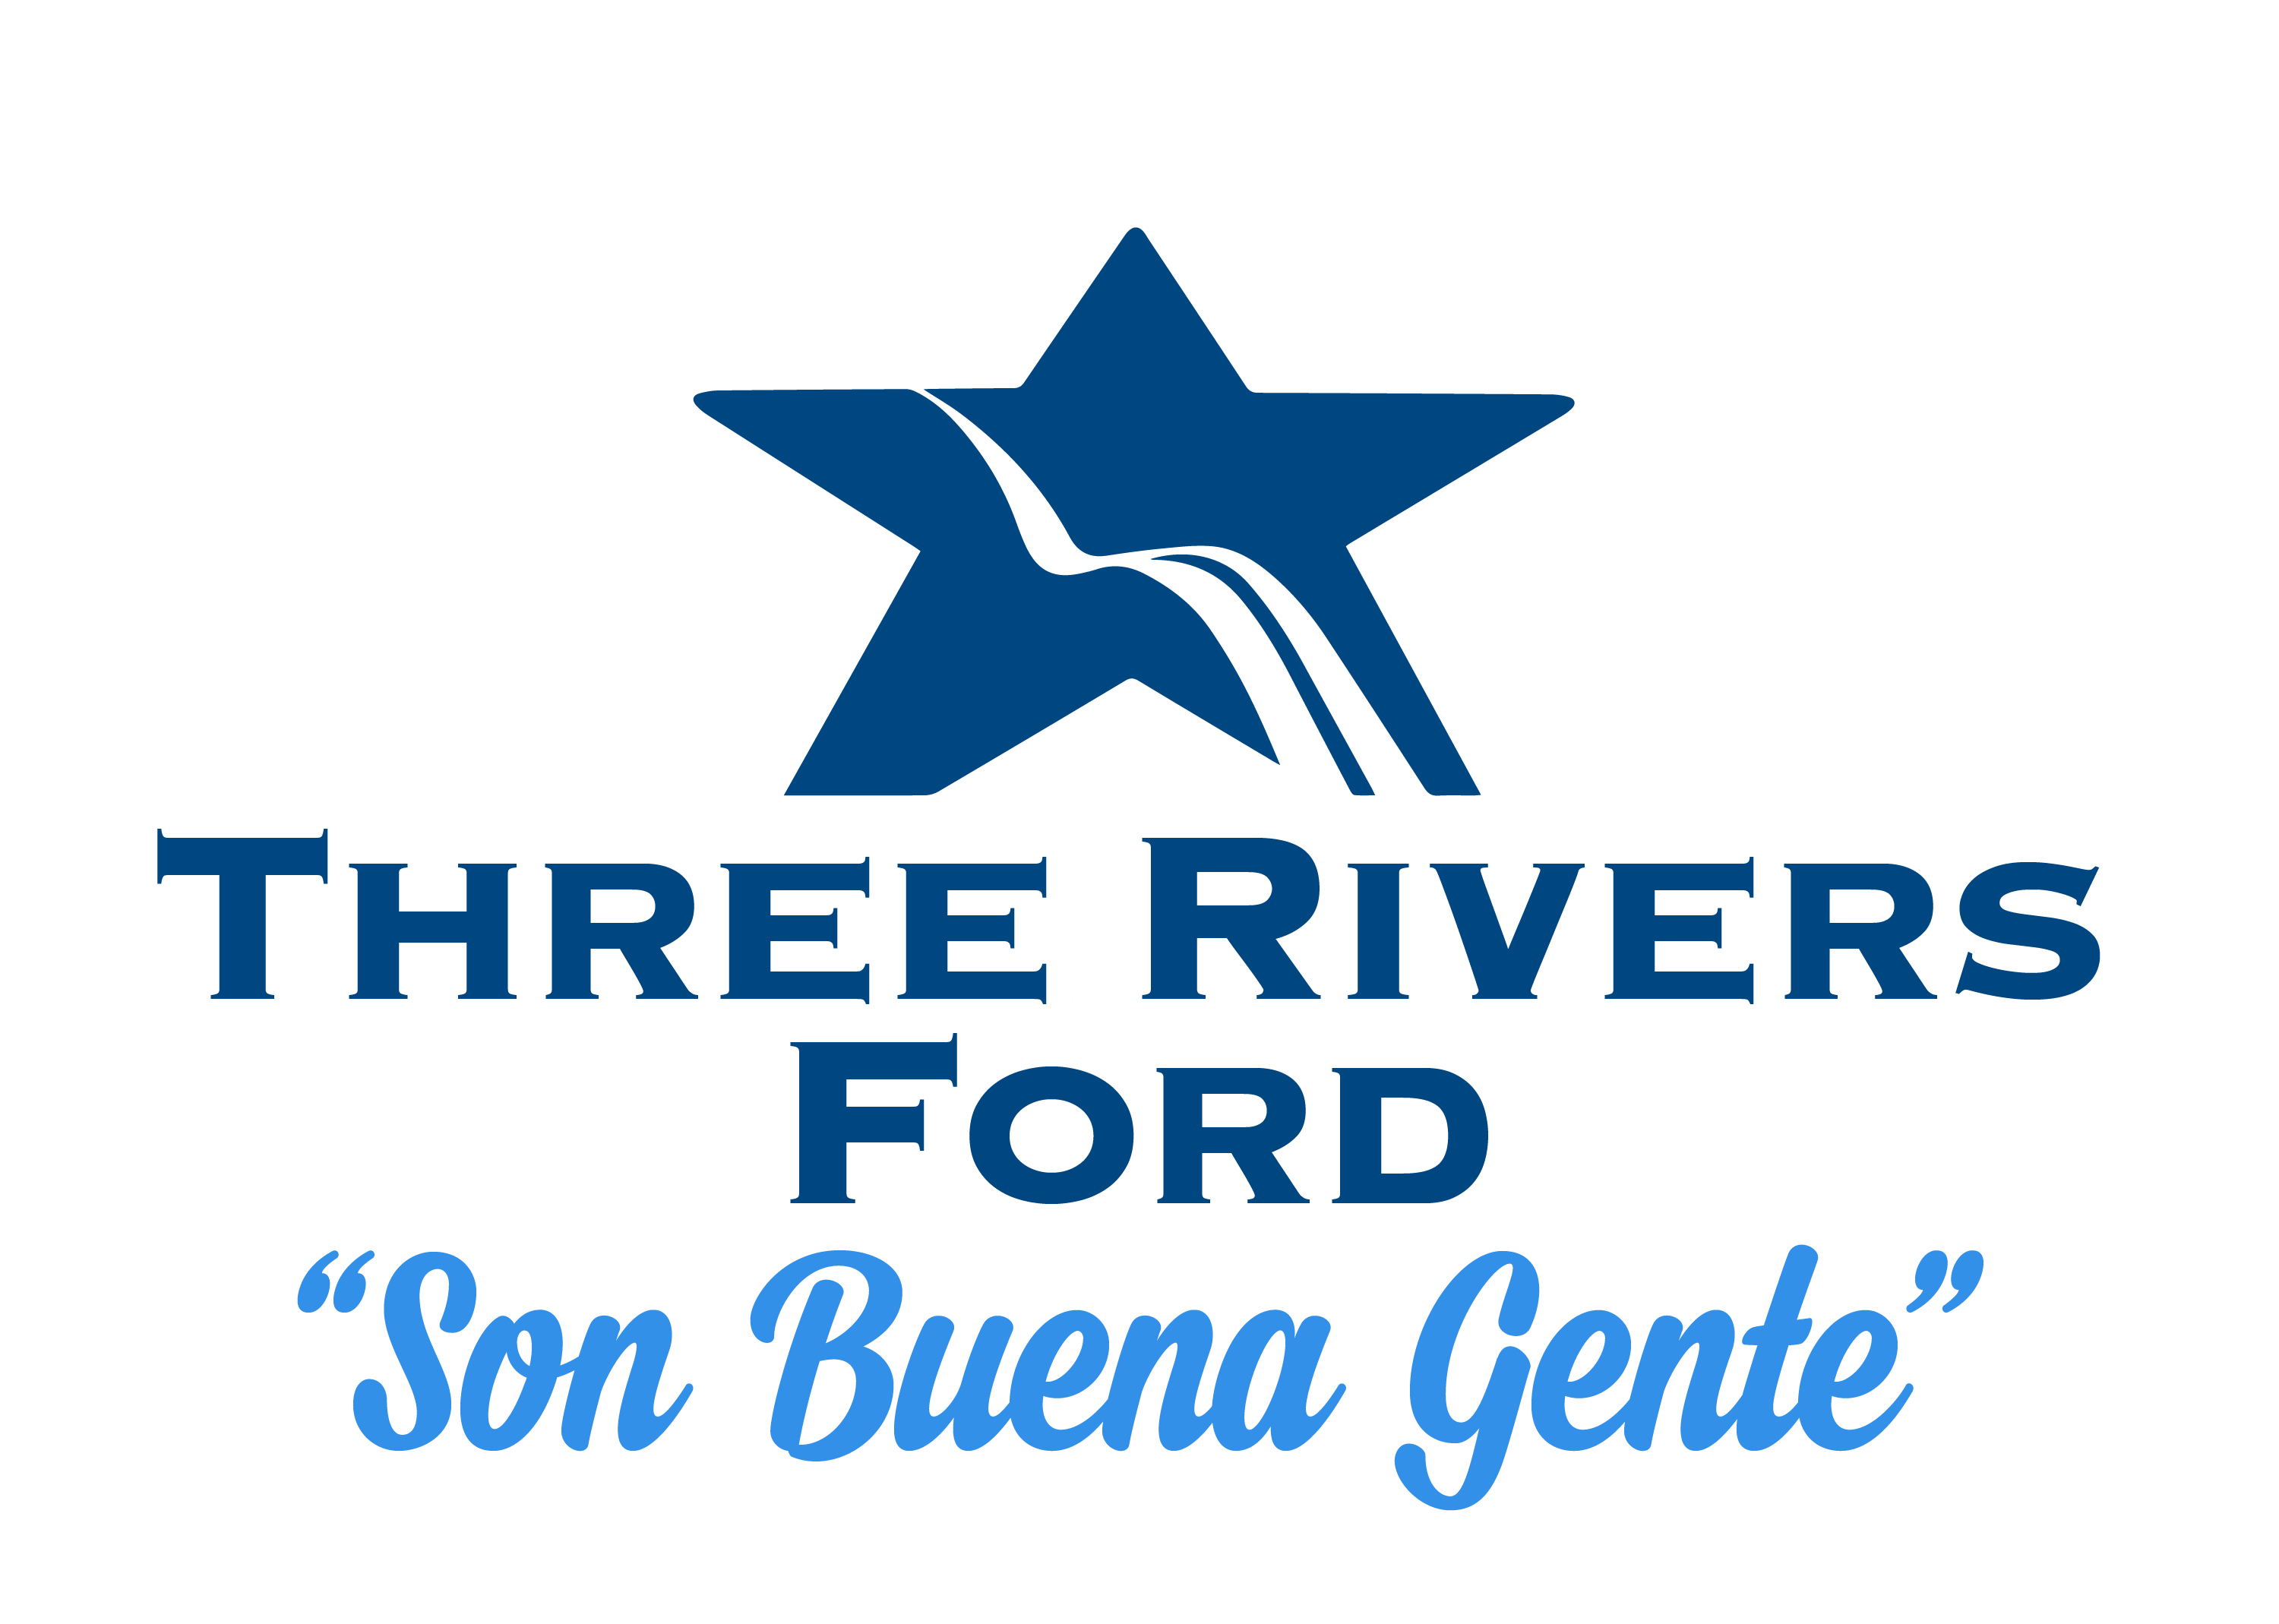 Three Rivers Ford in Three Rivers TX